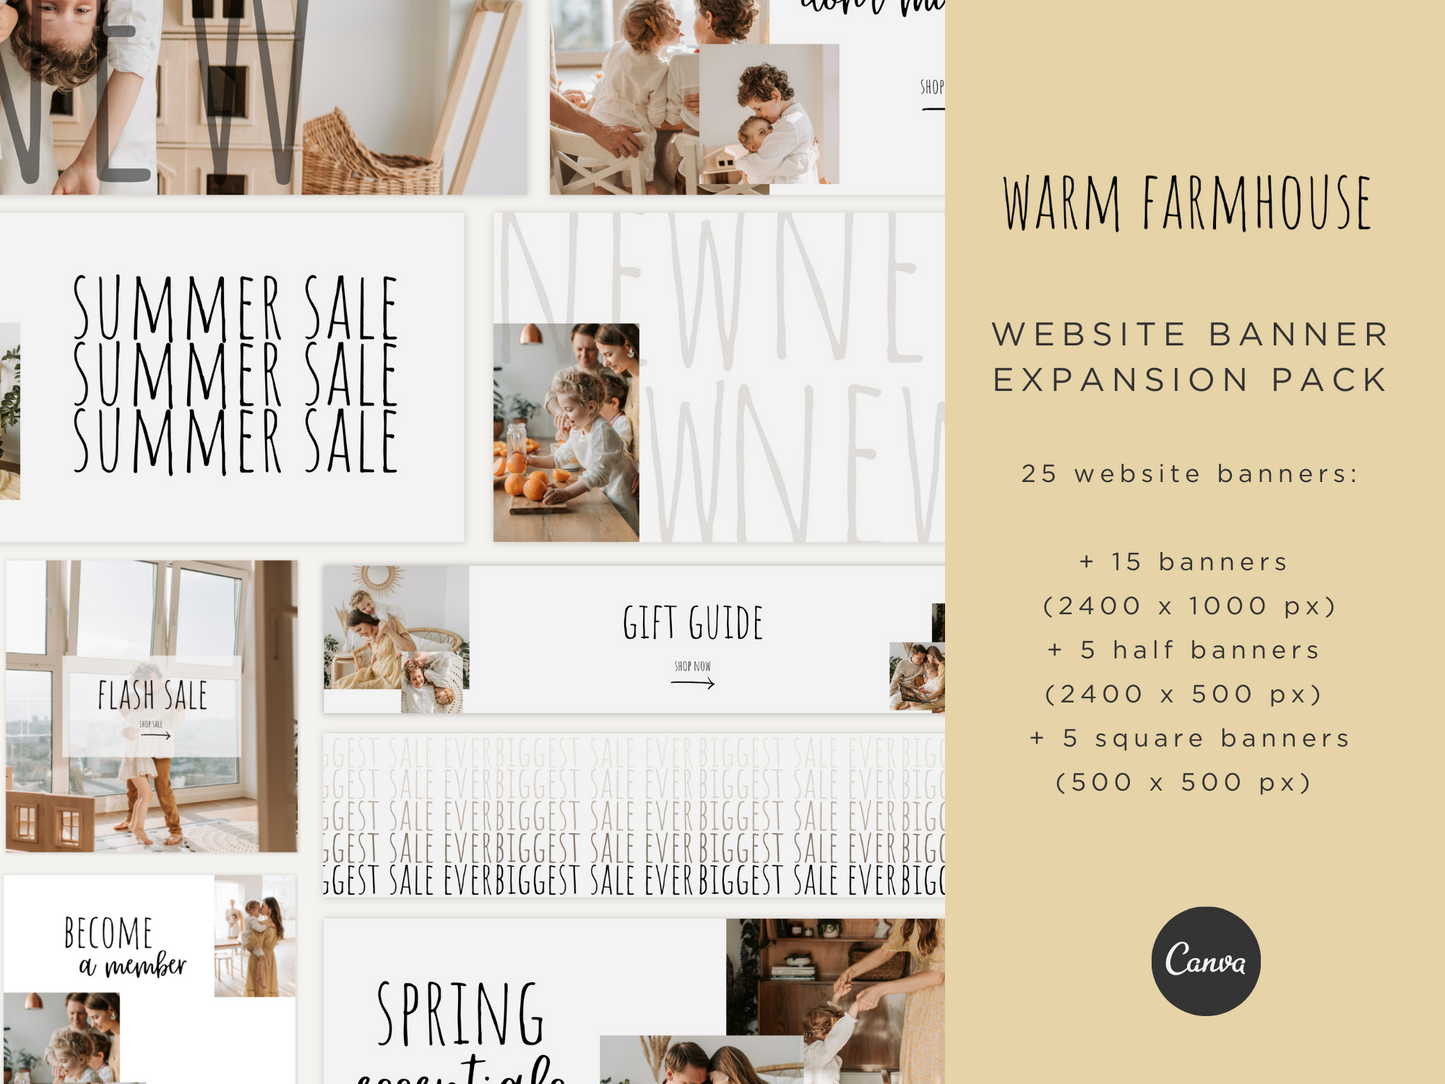 Warm Farmhouse Expansion Pack